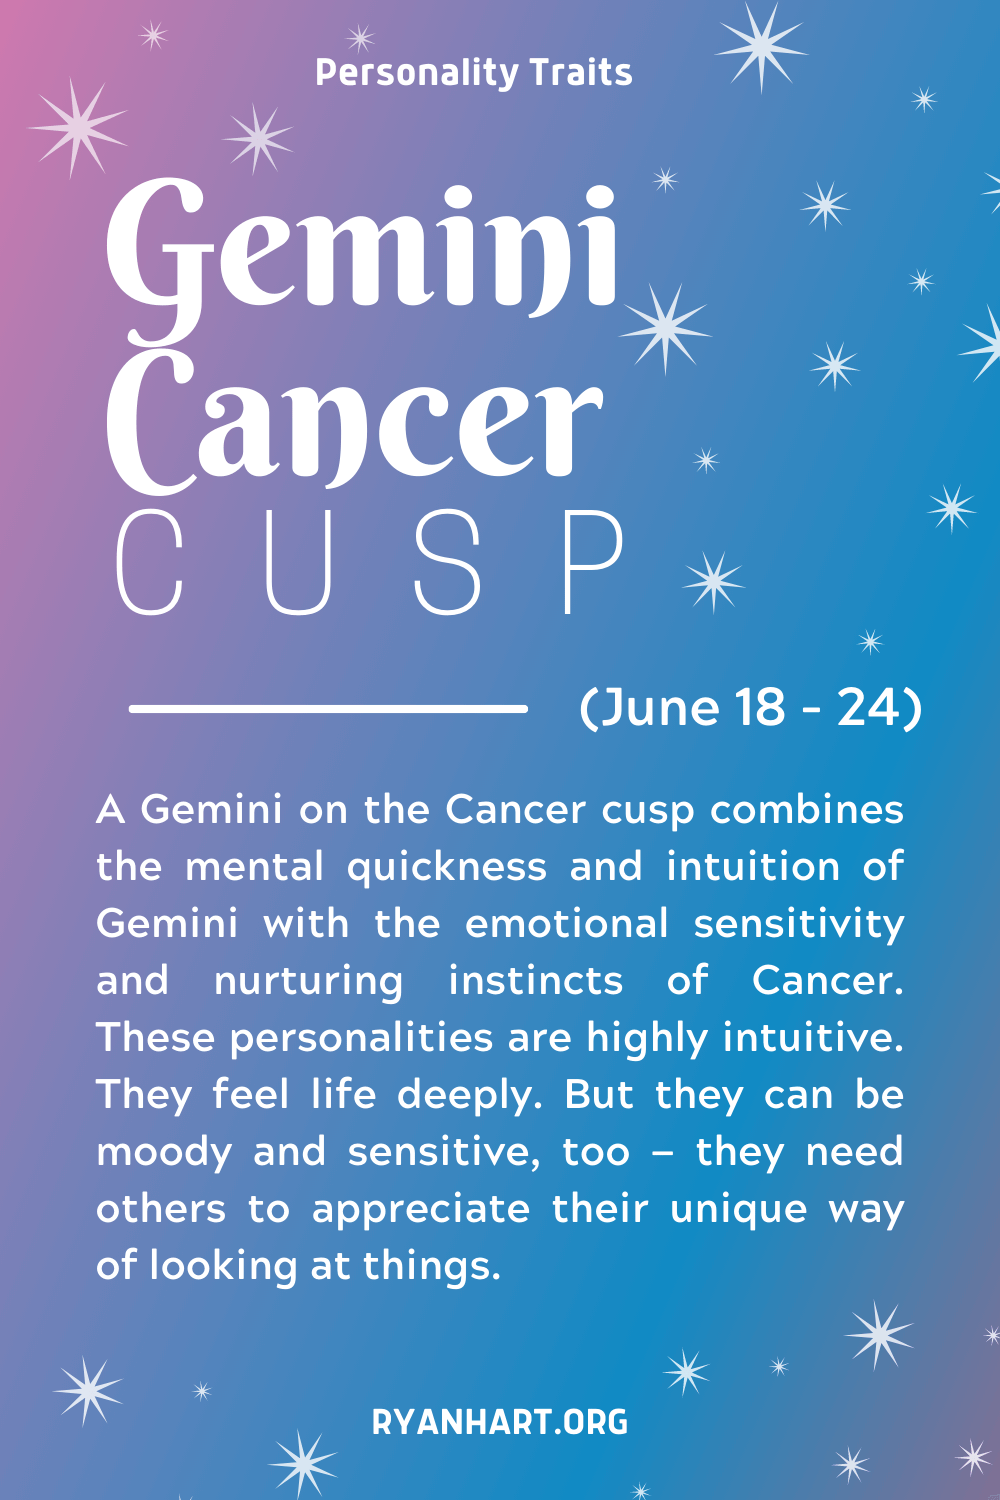 Gemini Cancer Cusp Description